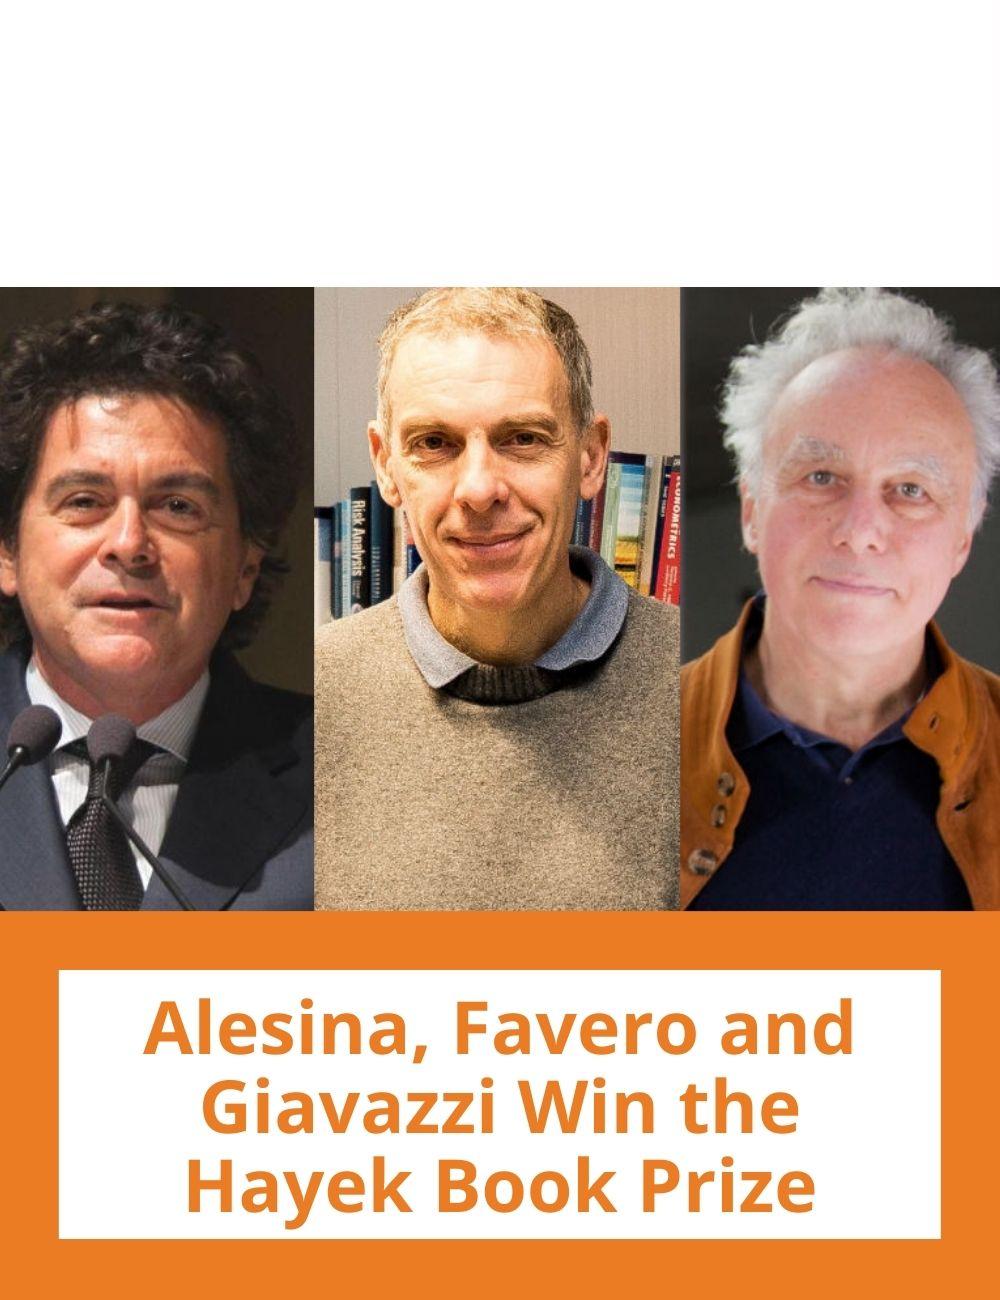 Link to related stories. Image: photos of Alberto Alesina, Carlo Favero and Francesco Giavazzi. Story headline: Alesina, Favero and Giavazzi Win the Hayek Book Prize